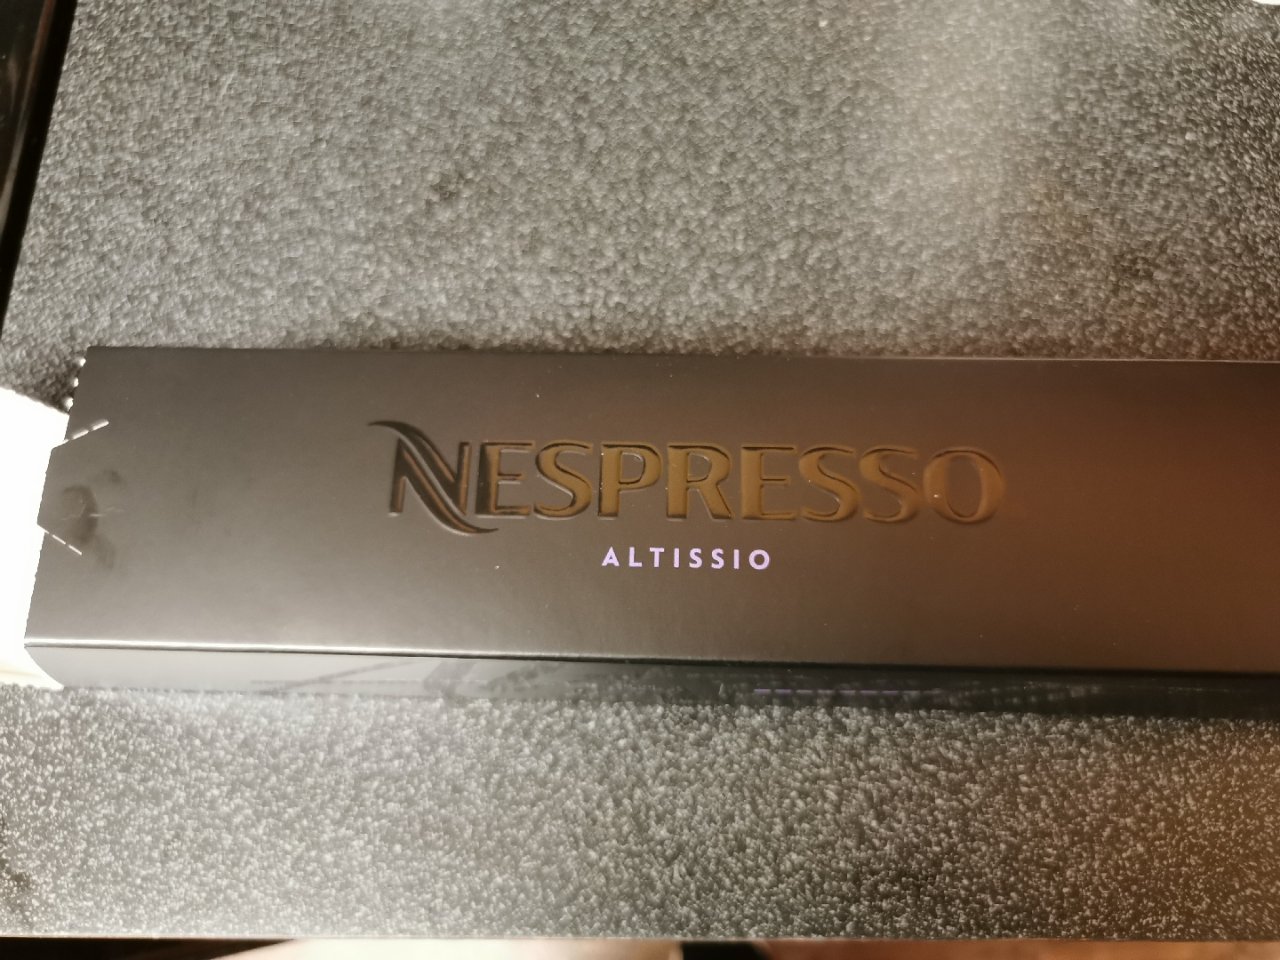 Nespresso Altissio